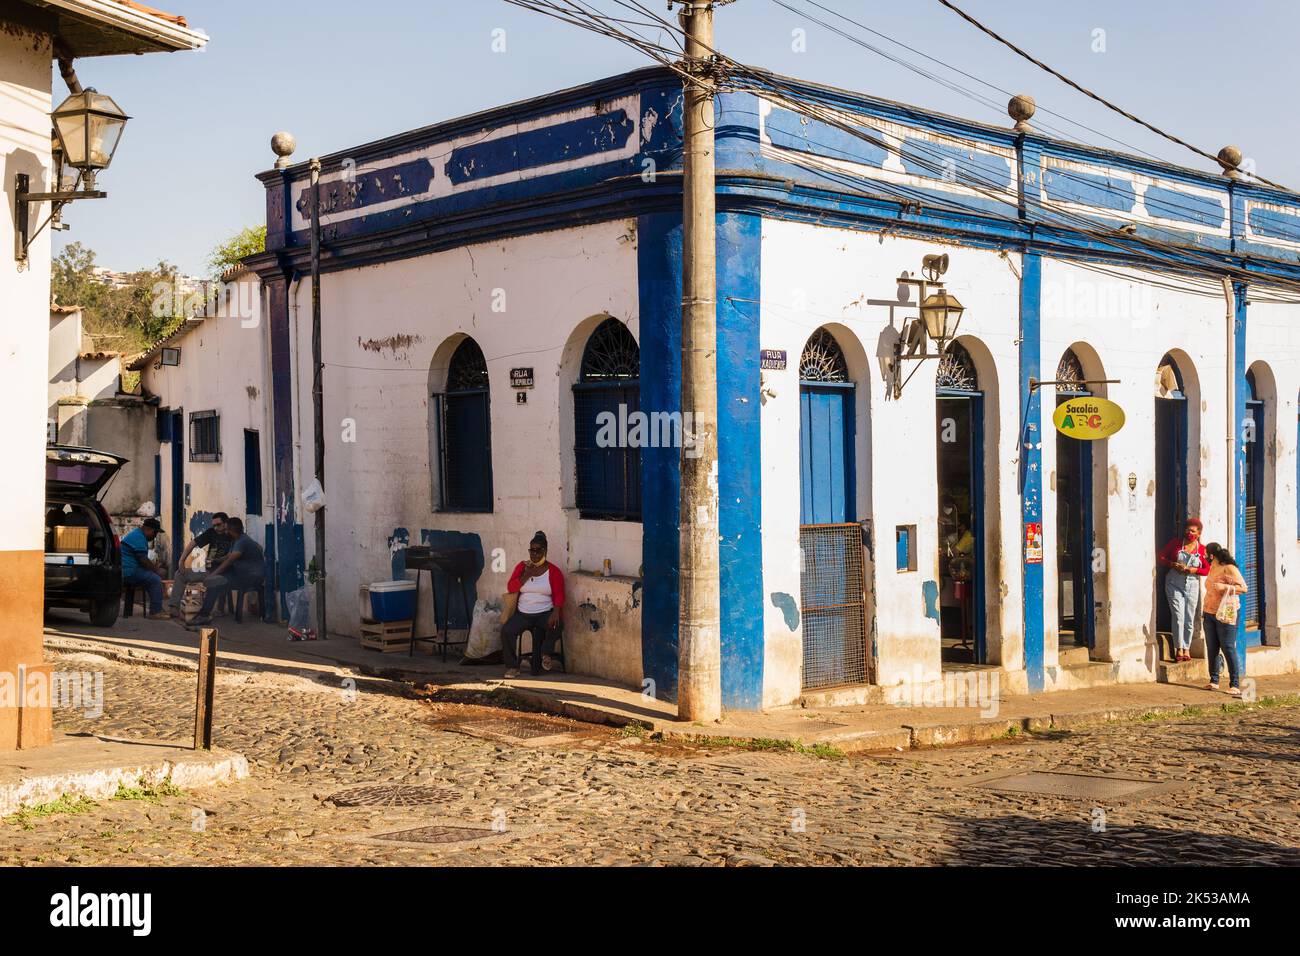 Angolo di negozio di alimentari coloniali a Sabará, Minas Gerais, Brasile. Foto Stock